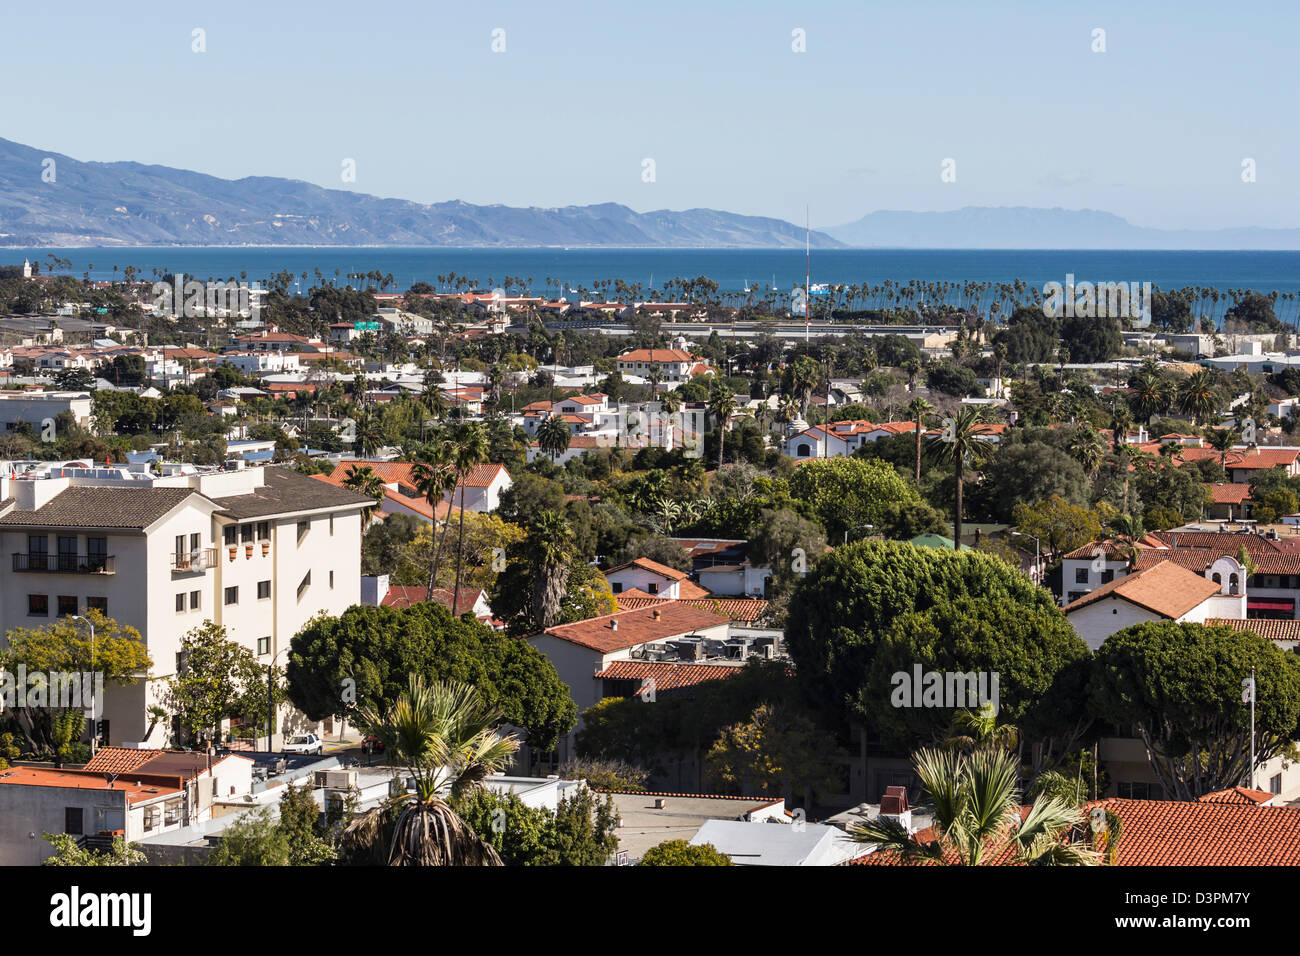 Clear afternoon view of Santa Barbara, California. Stock Photo